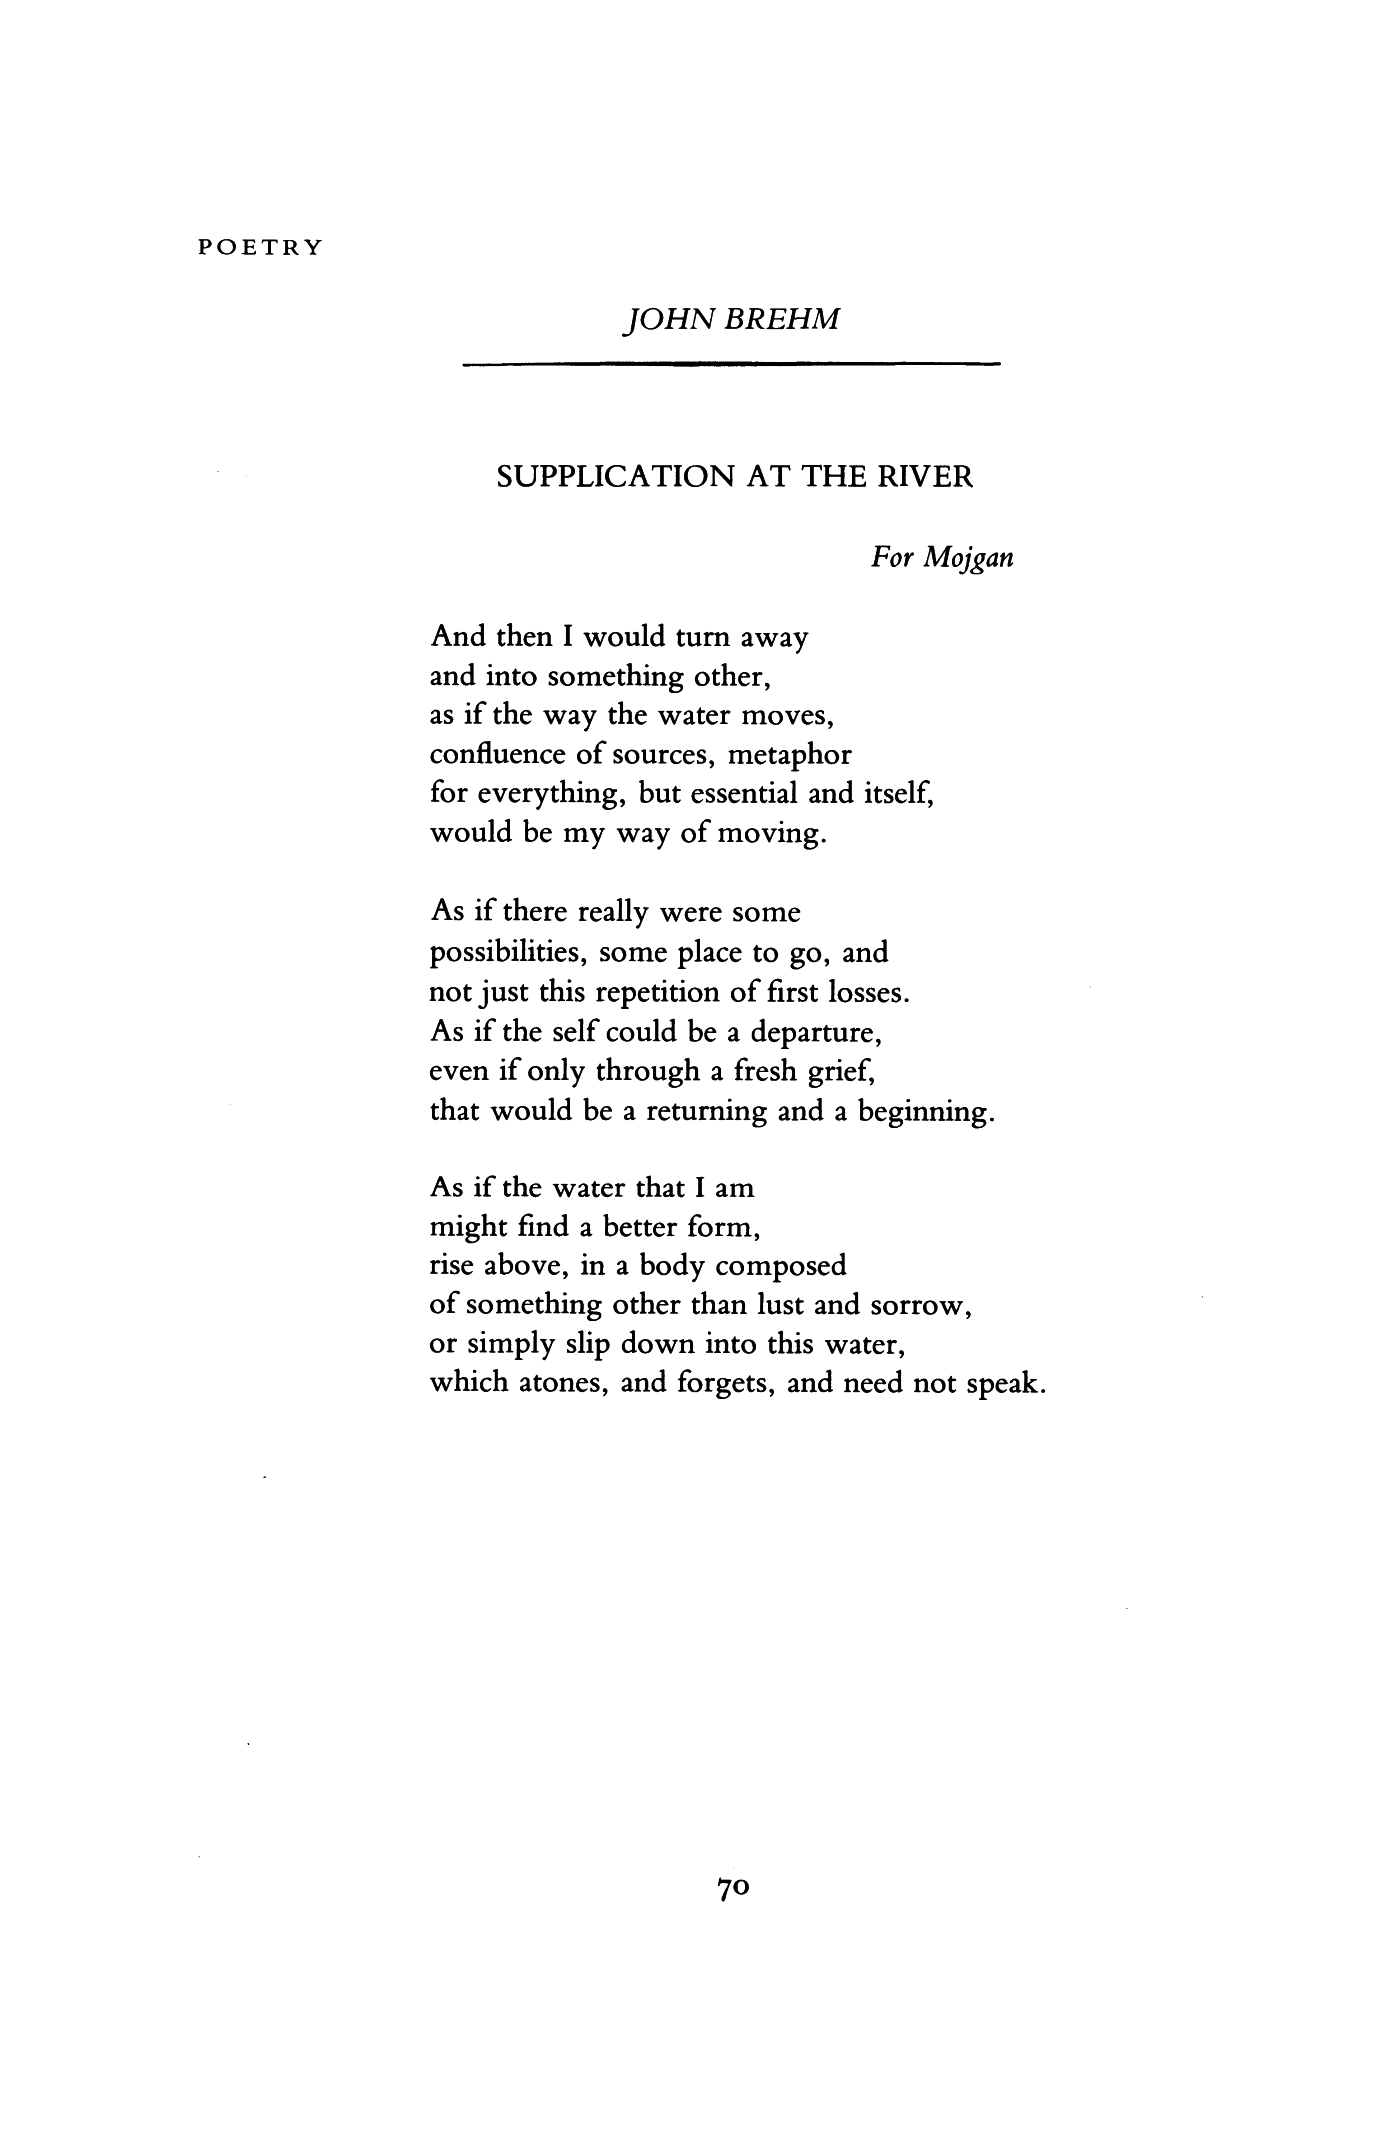 my river poem